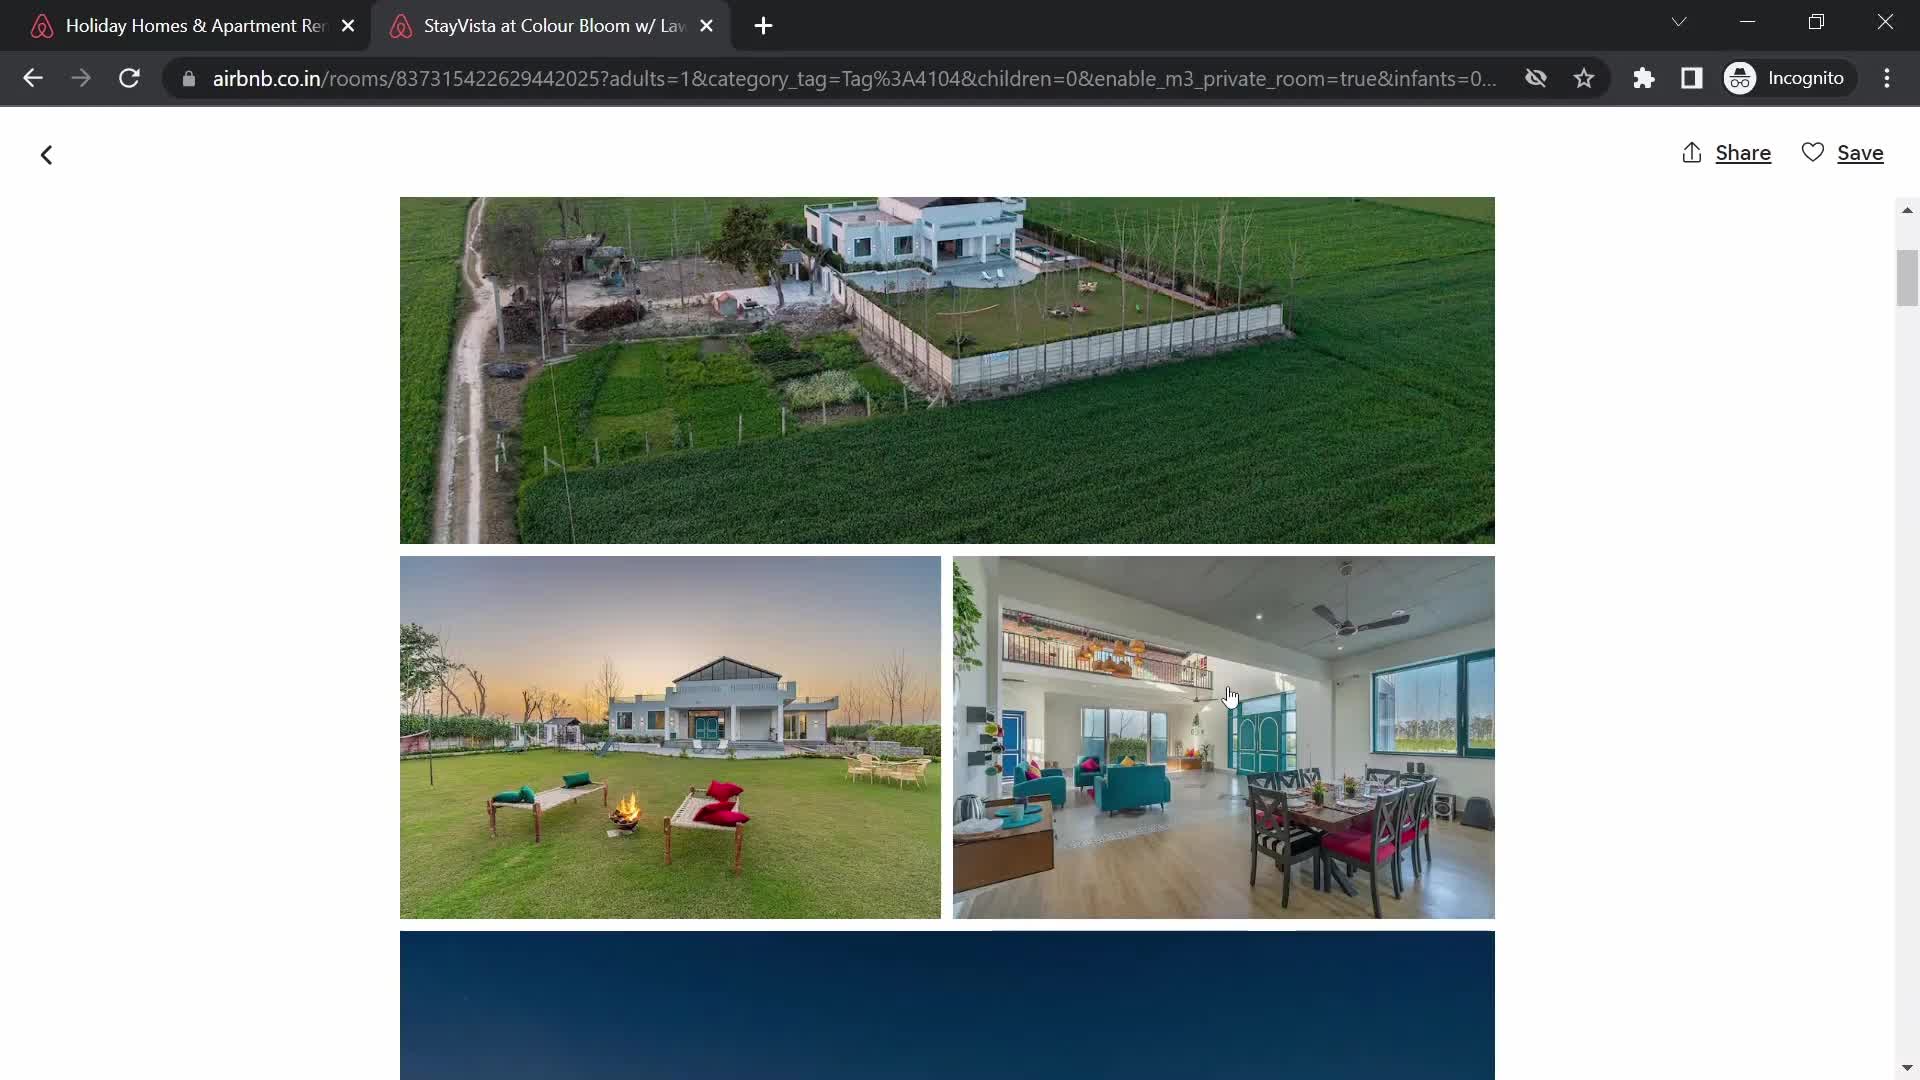 Airbnb image gallery screenshot